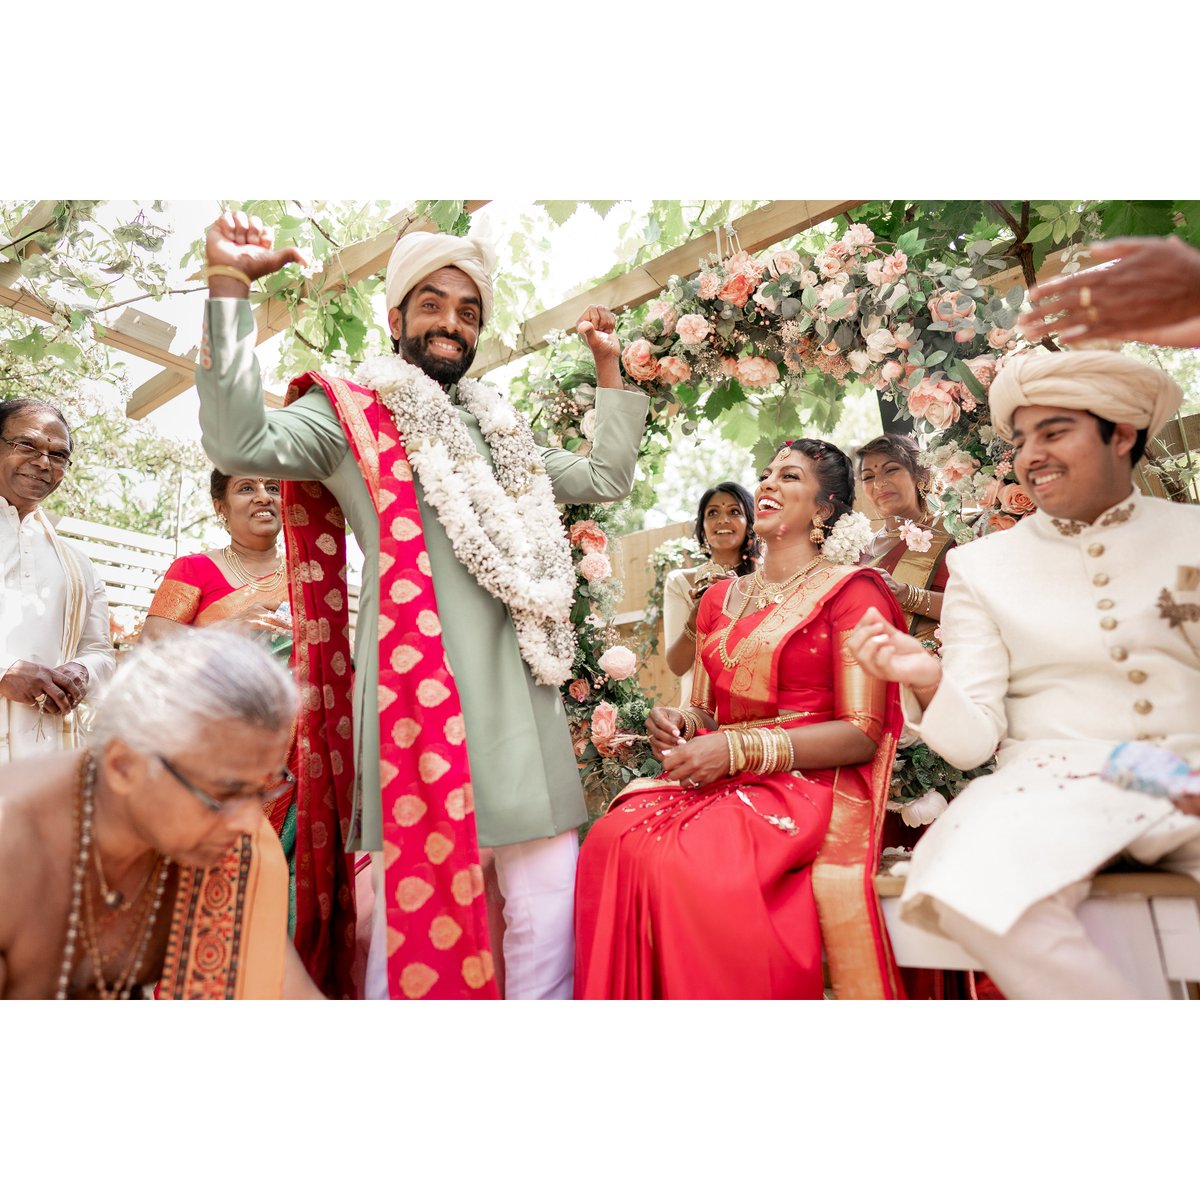 There's no beating genuine wedding moments like this!

#wedding #photography #Indianweddings #indianceremonies #weddingmoments